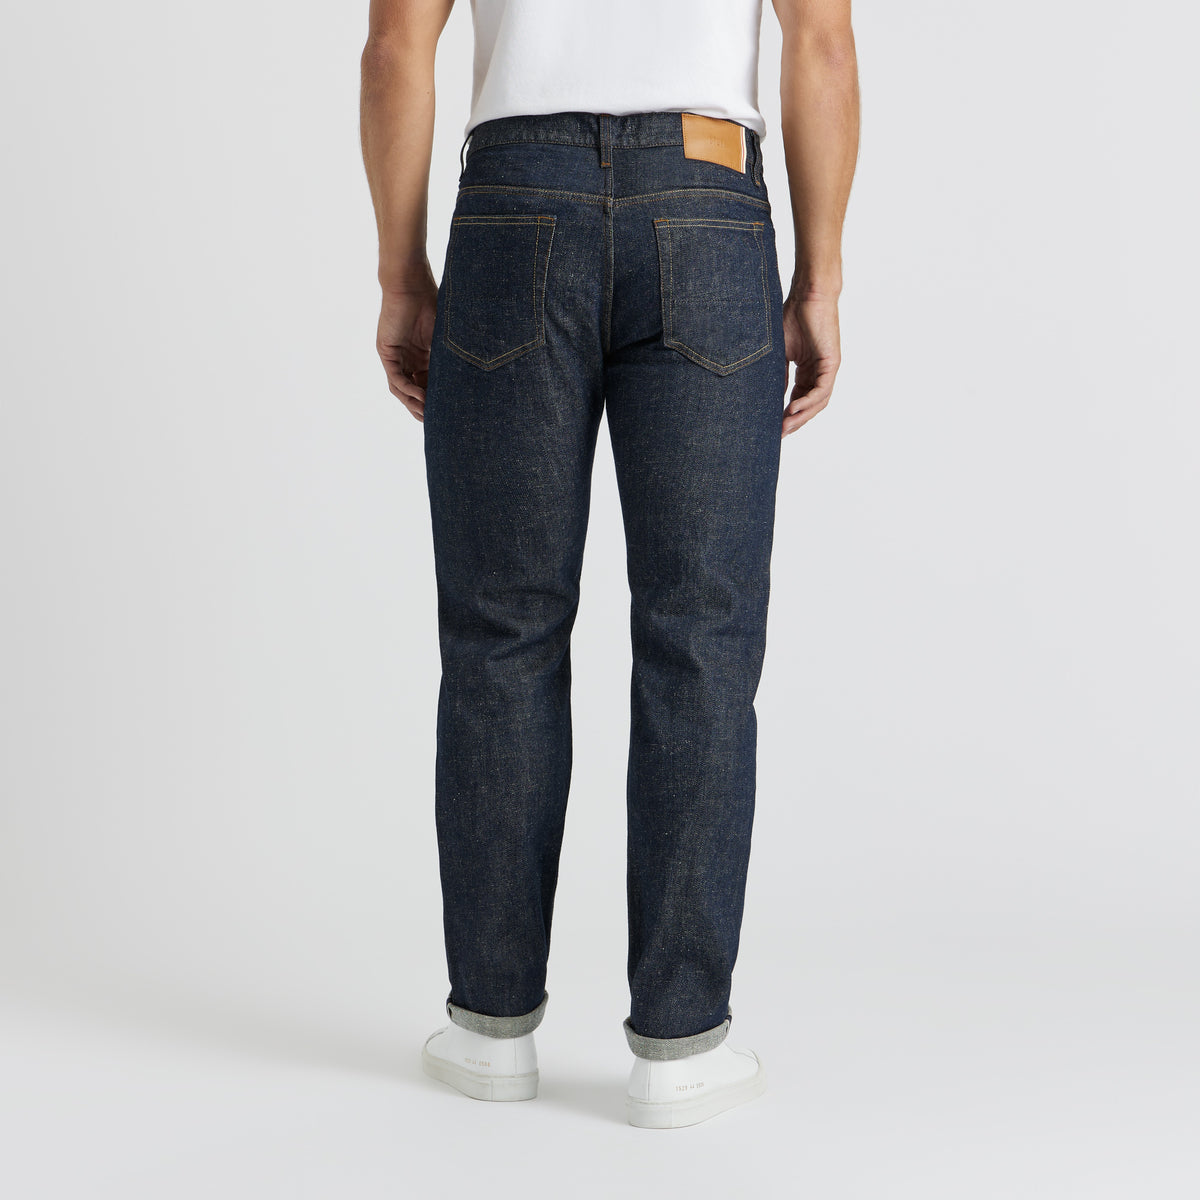 SPOKE Selvedge Denim - Rinse Wash Custom Fit Jeans - SPOKE